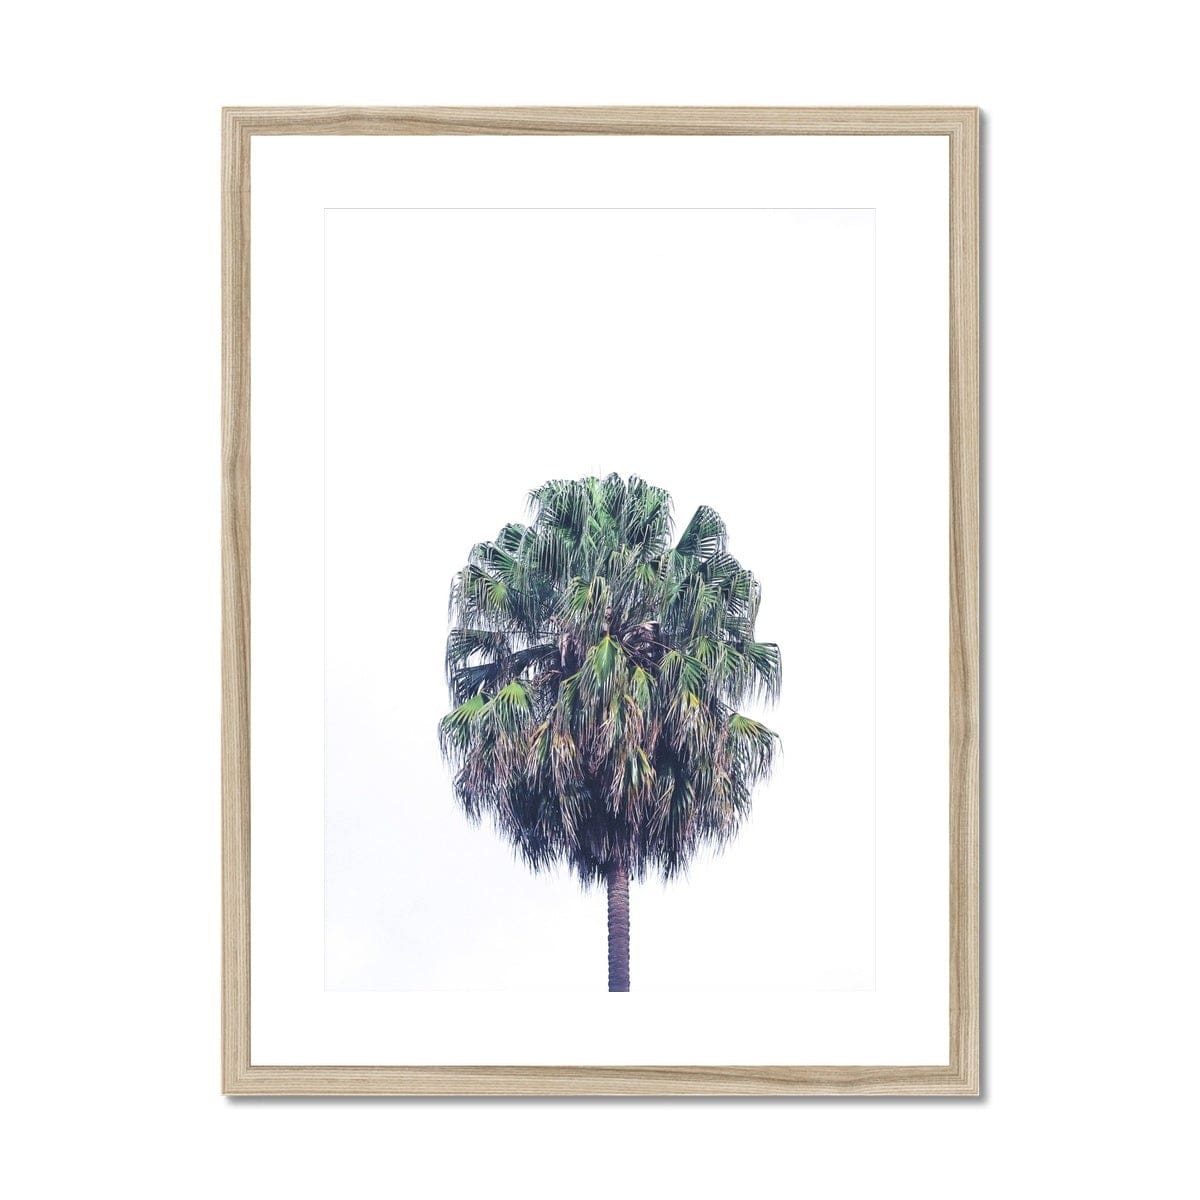 Adam Davies Framed A4 Portrait (21x29.7cm) / Natural Frame Vaucluse Palm Tree V2 Framed & Mounted Print